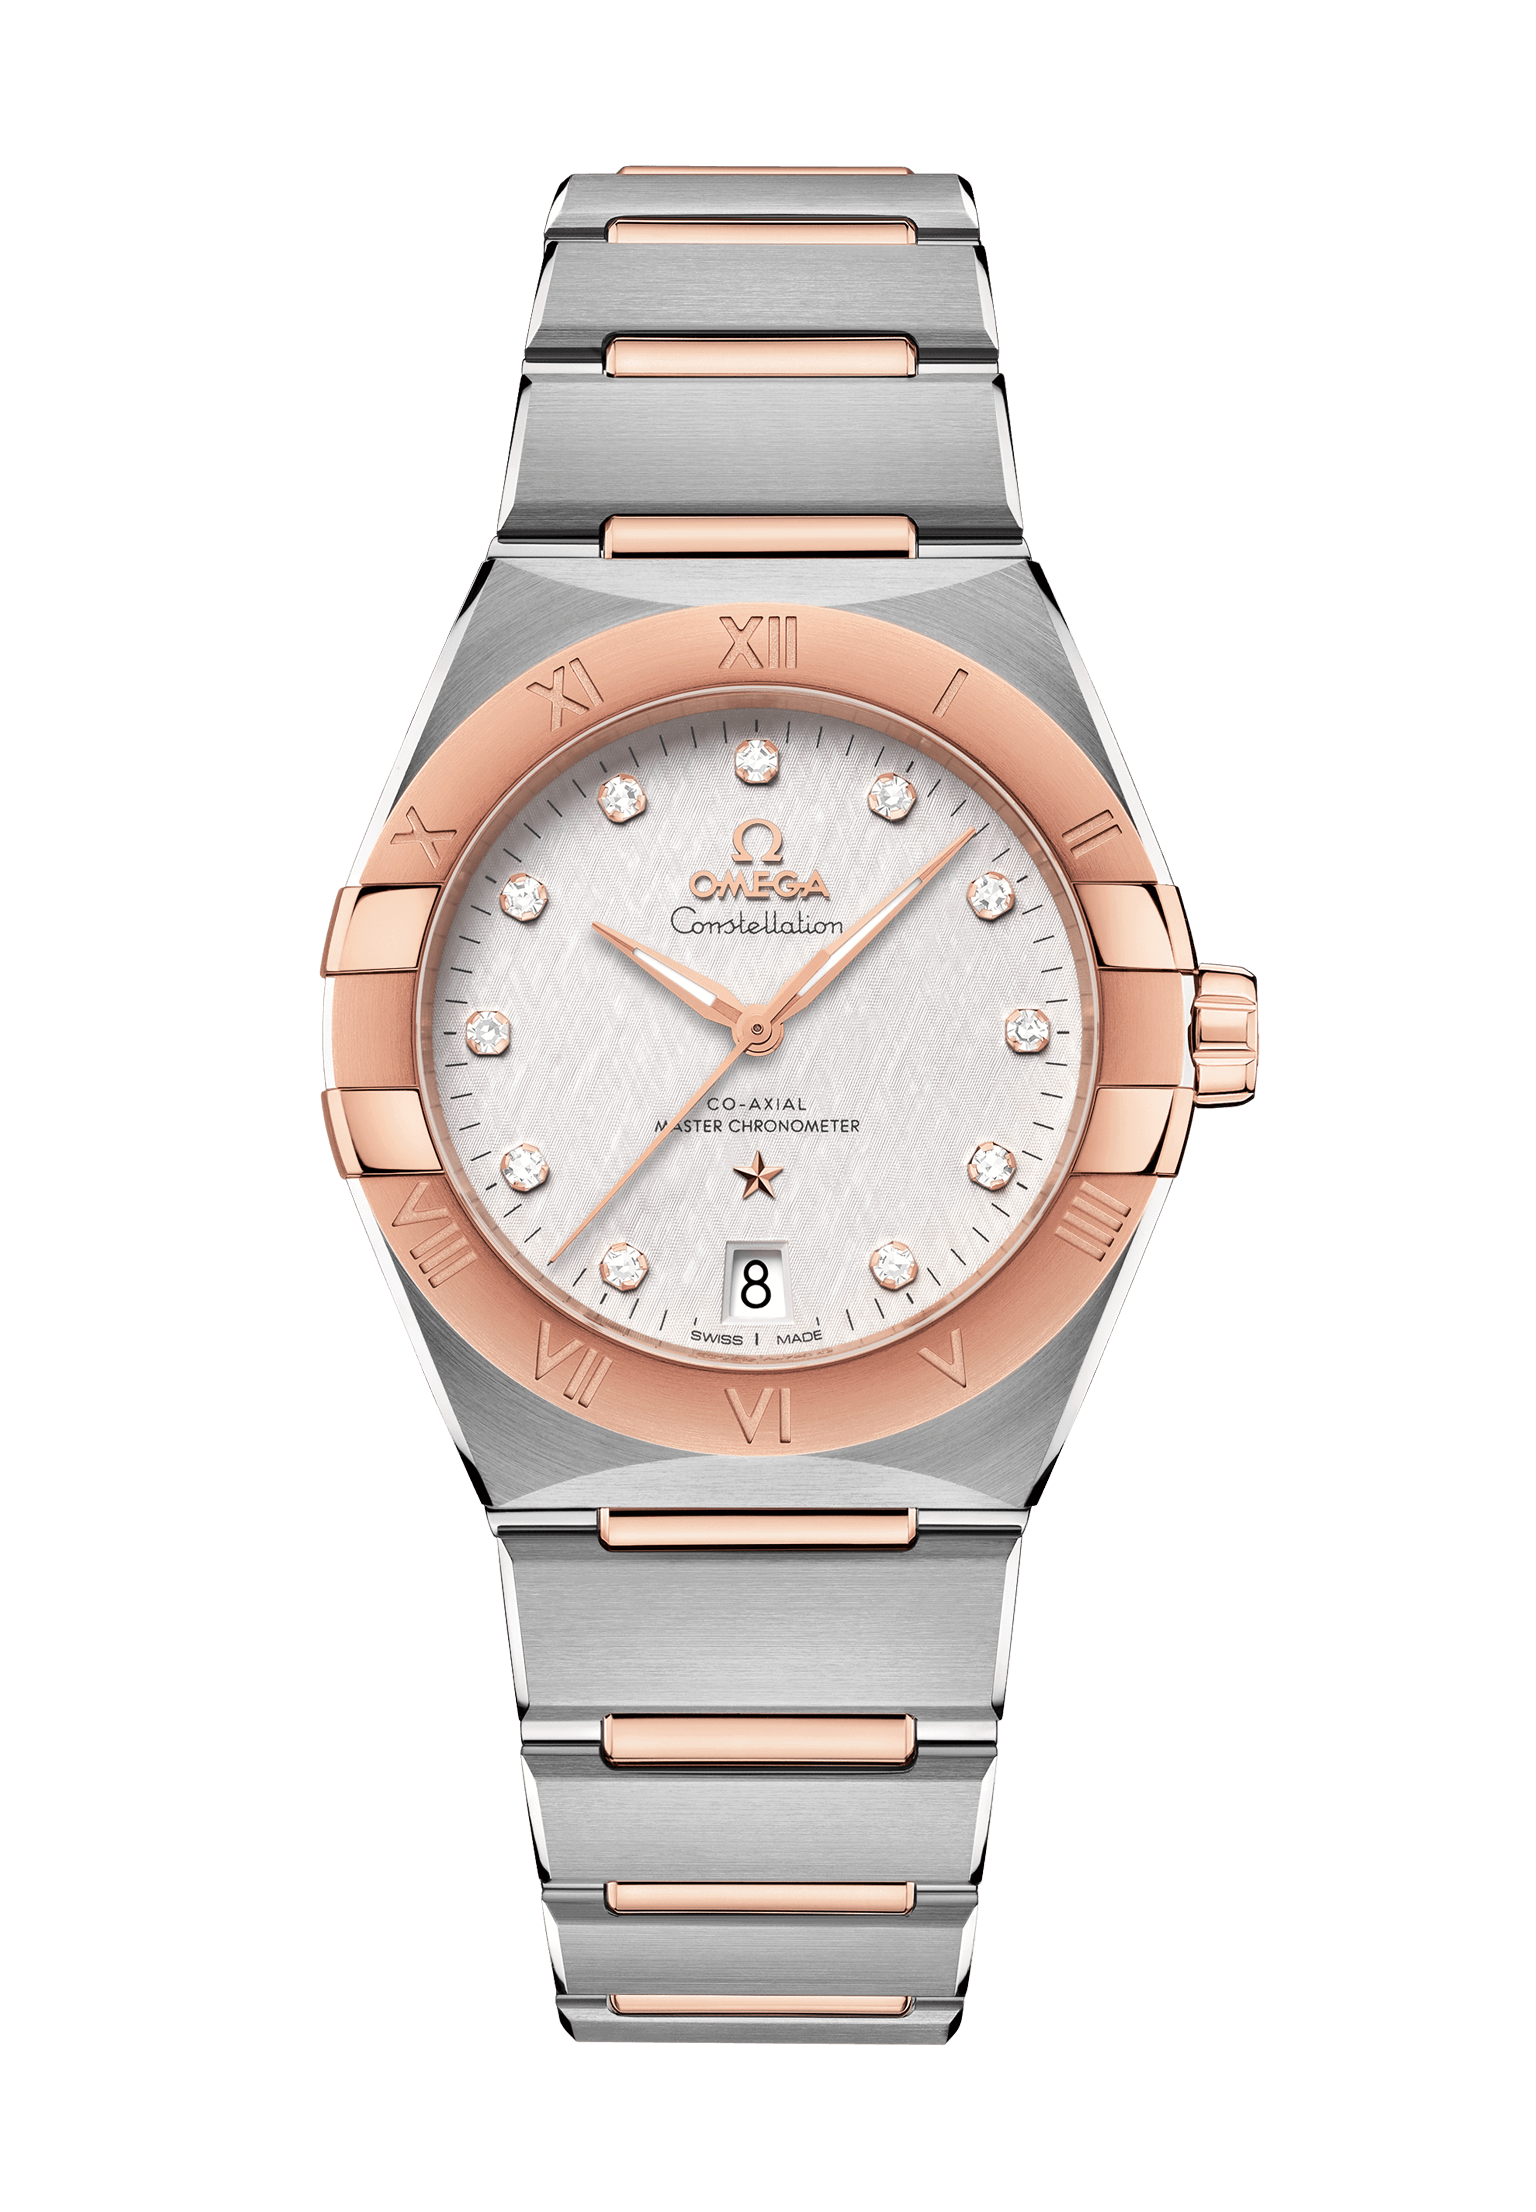 Men's watch / unisex  OMEGA, Constellation Co Axial Master Chronometer / 36mm, SKU: 131.20.36.20.52.001 | watchphilosophy.co.uk